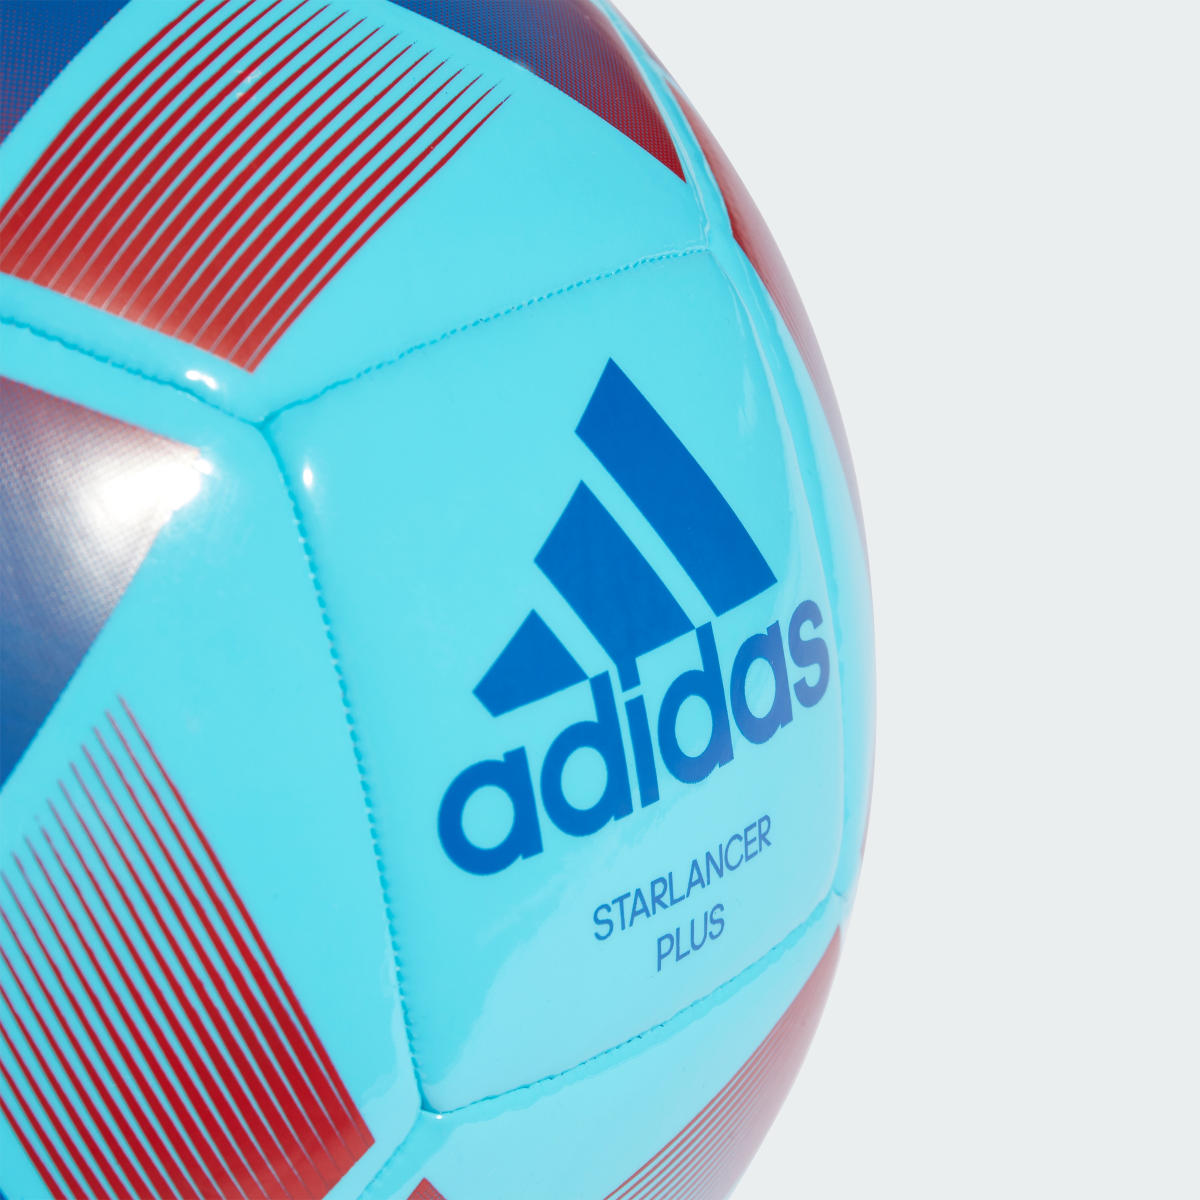 Adidas Starlancer Plus Football. 4